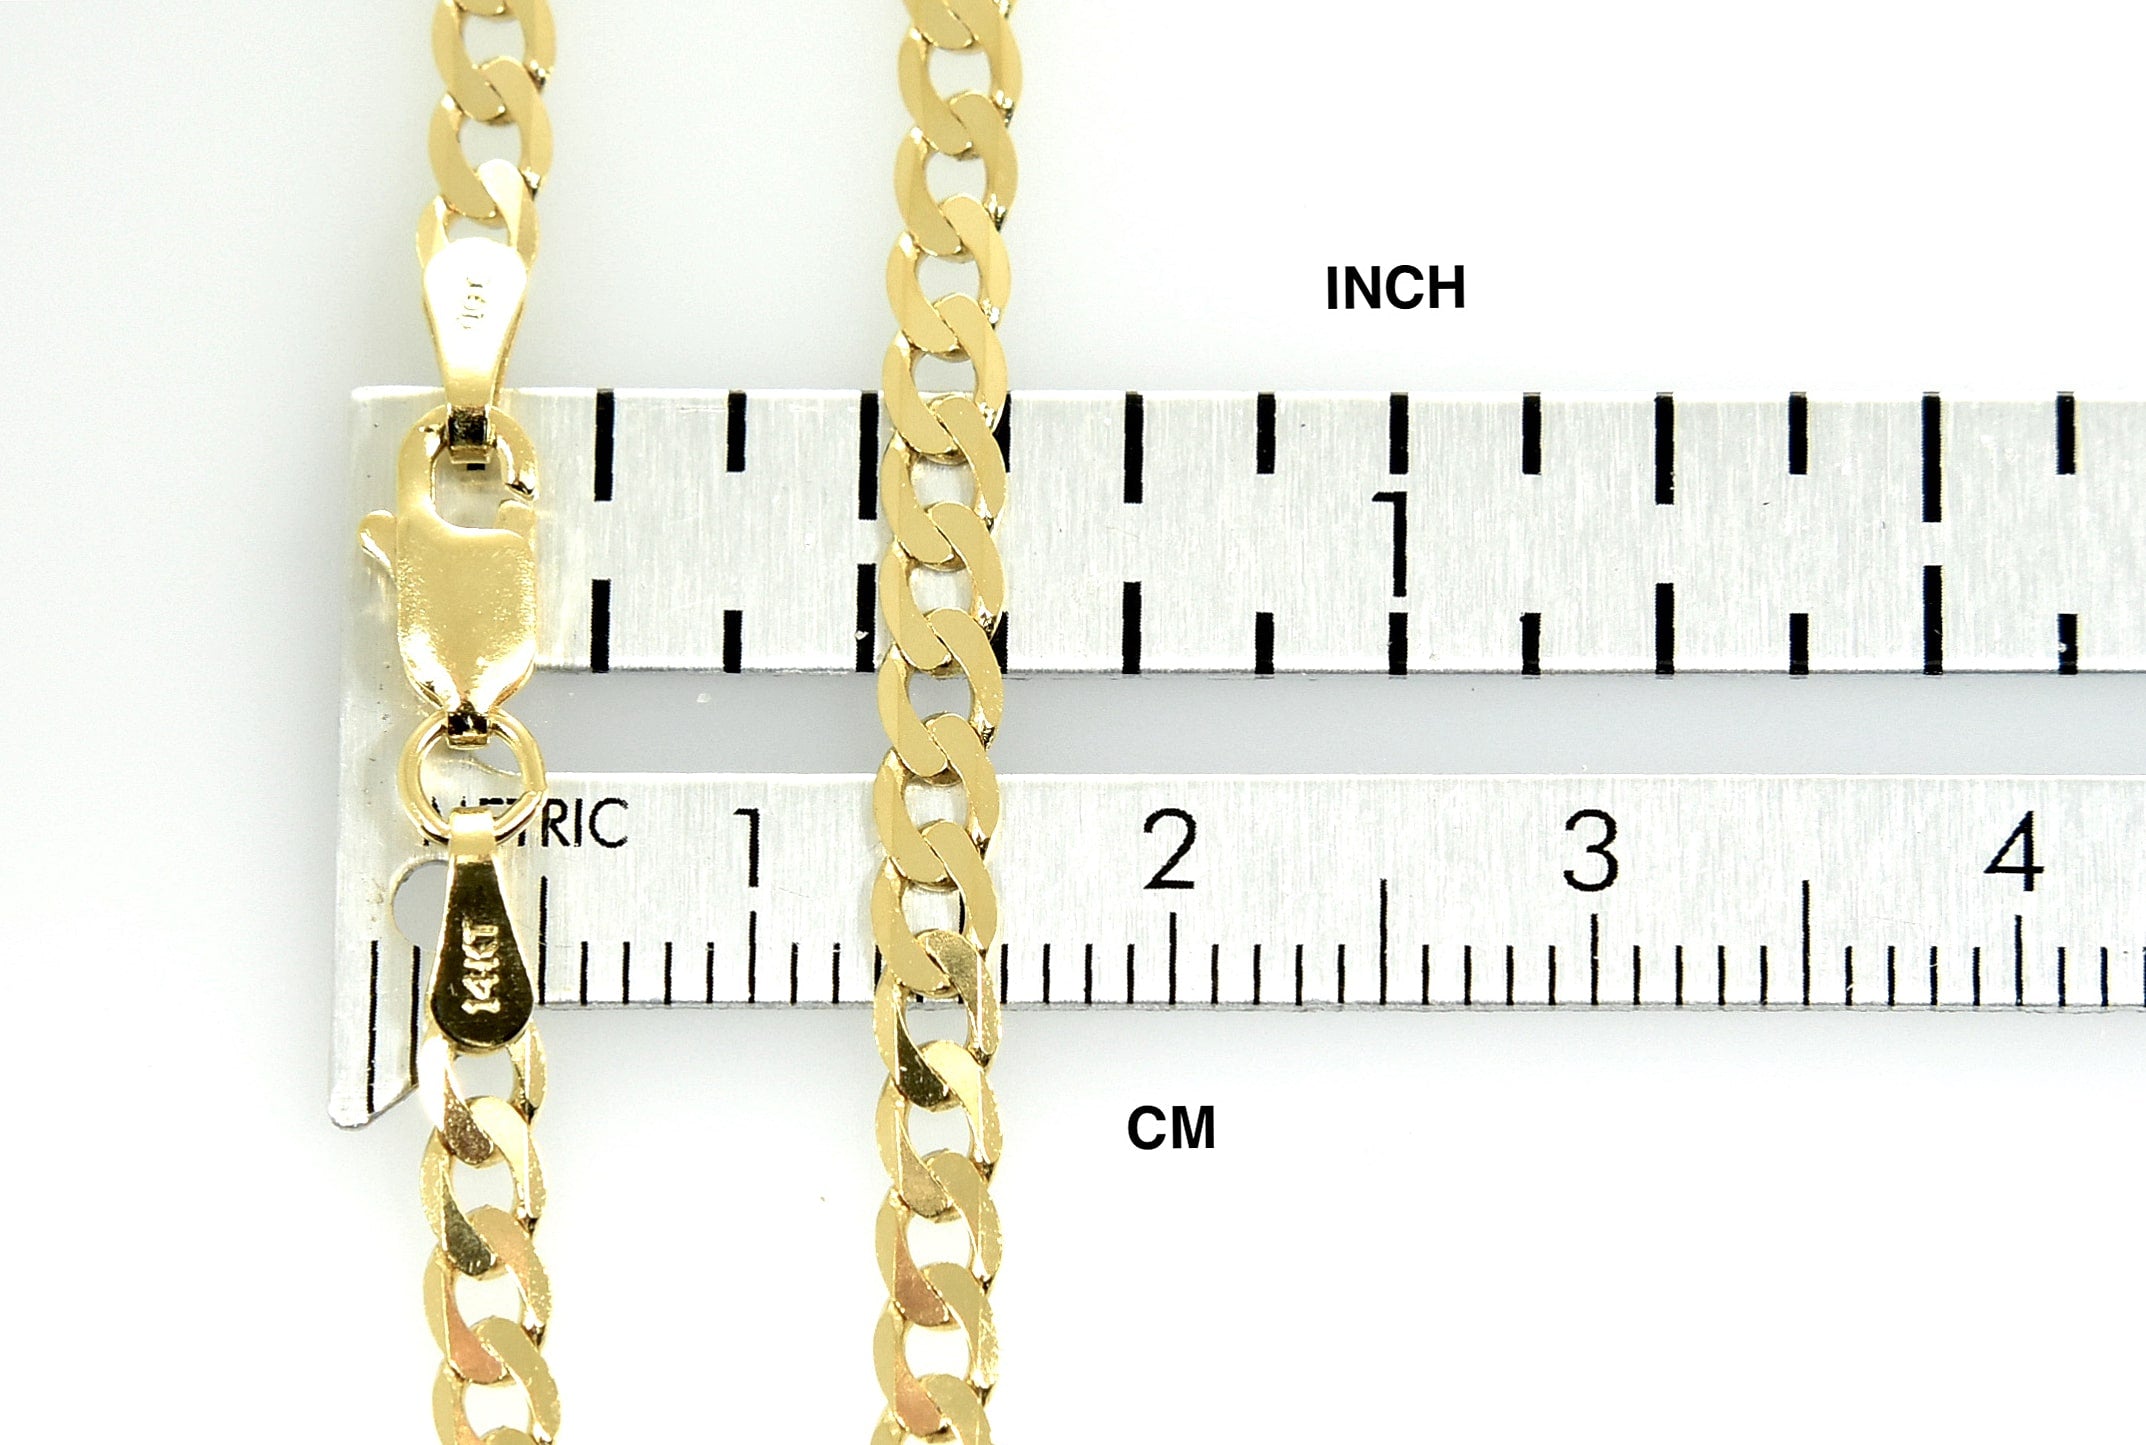 14k Yellow Gold 2.9mm Beveled Curb Link Bracelet Anklet Necklace Pendant Chain